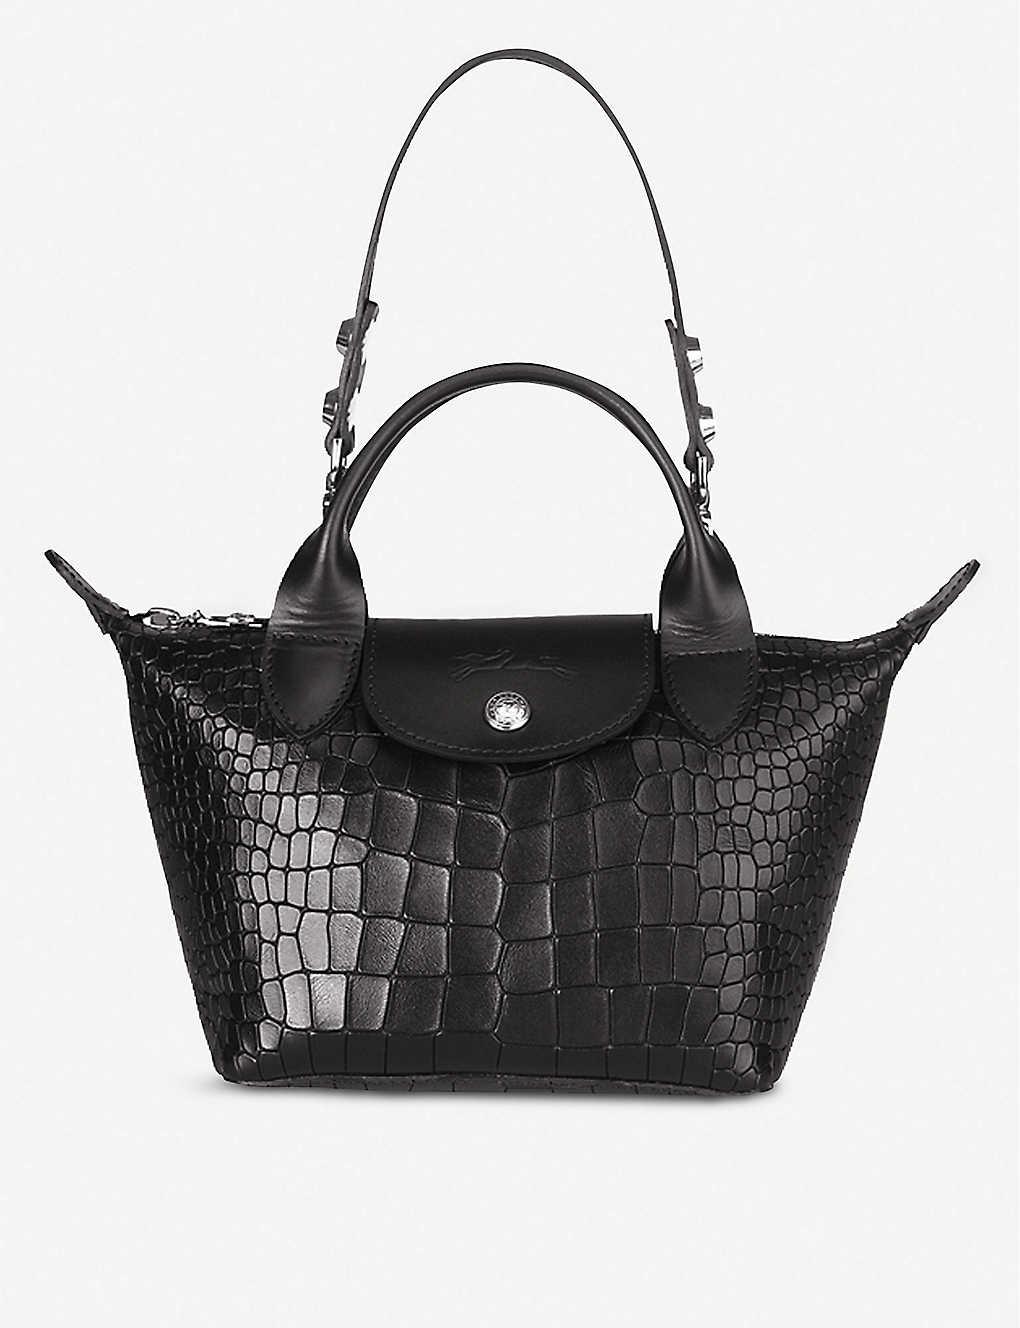 Longchamp - Le Pliage Cuir Top Handle Croc Tote Bag in Black